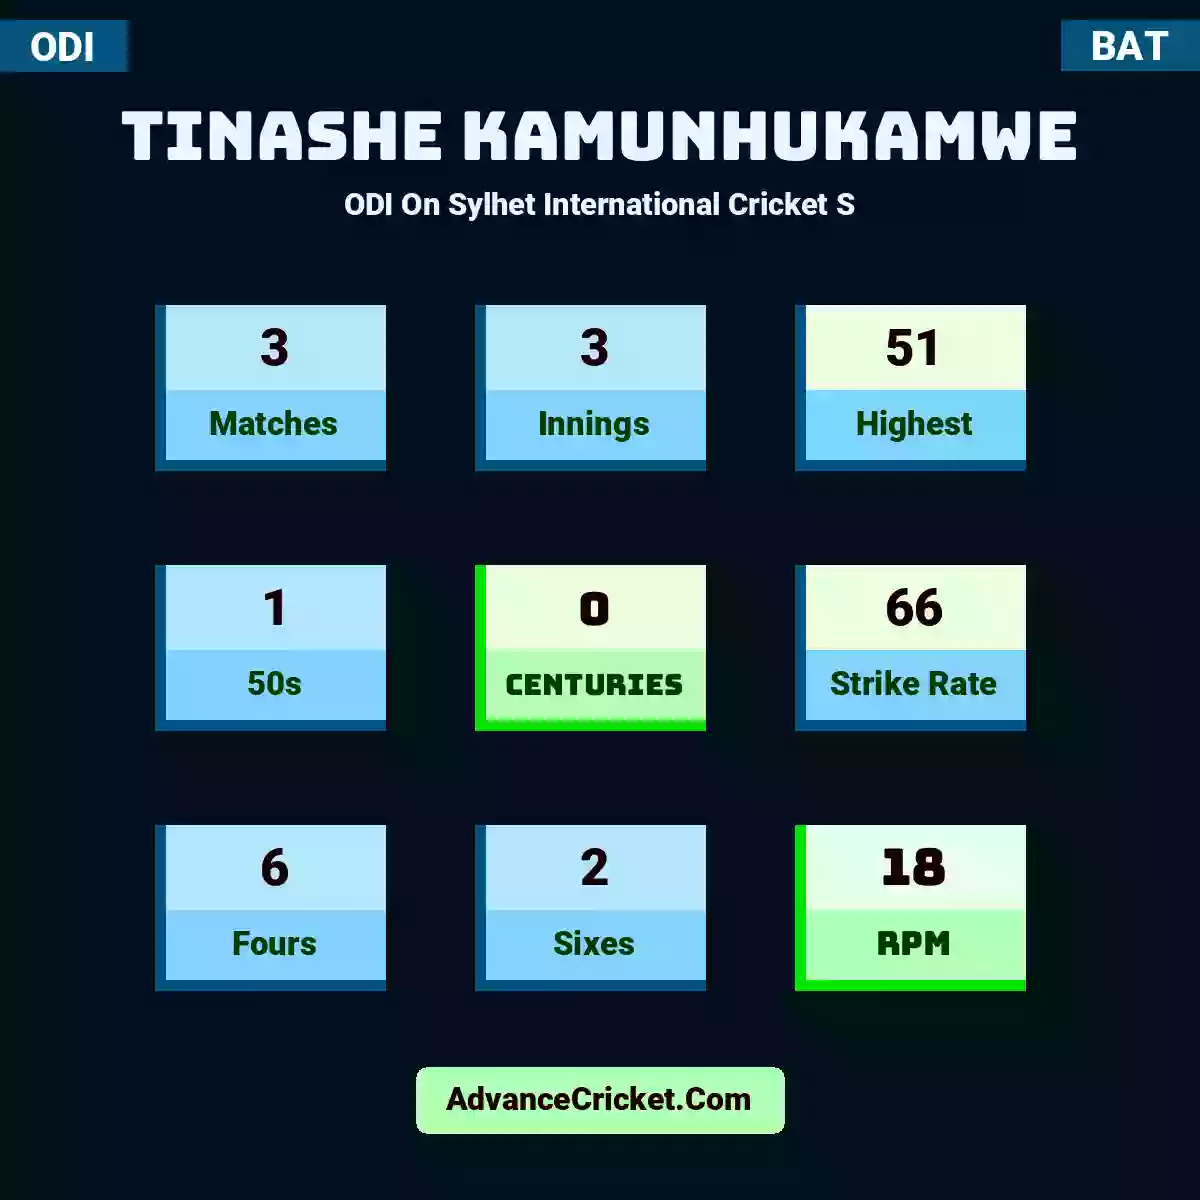 Tinashe Kamunhukamwe ODI  On Sylhet International Cricket S, Tinashe Kamunhukamwe played 3 matches, scored 51 runs as highest, 1 half-centuries, and 0 centuries, with a strike rate of 66. T.Kamunhukamwe hit 6 fours and 2 sixes, with an RPM of 18.